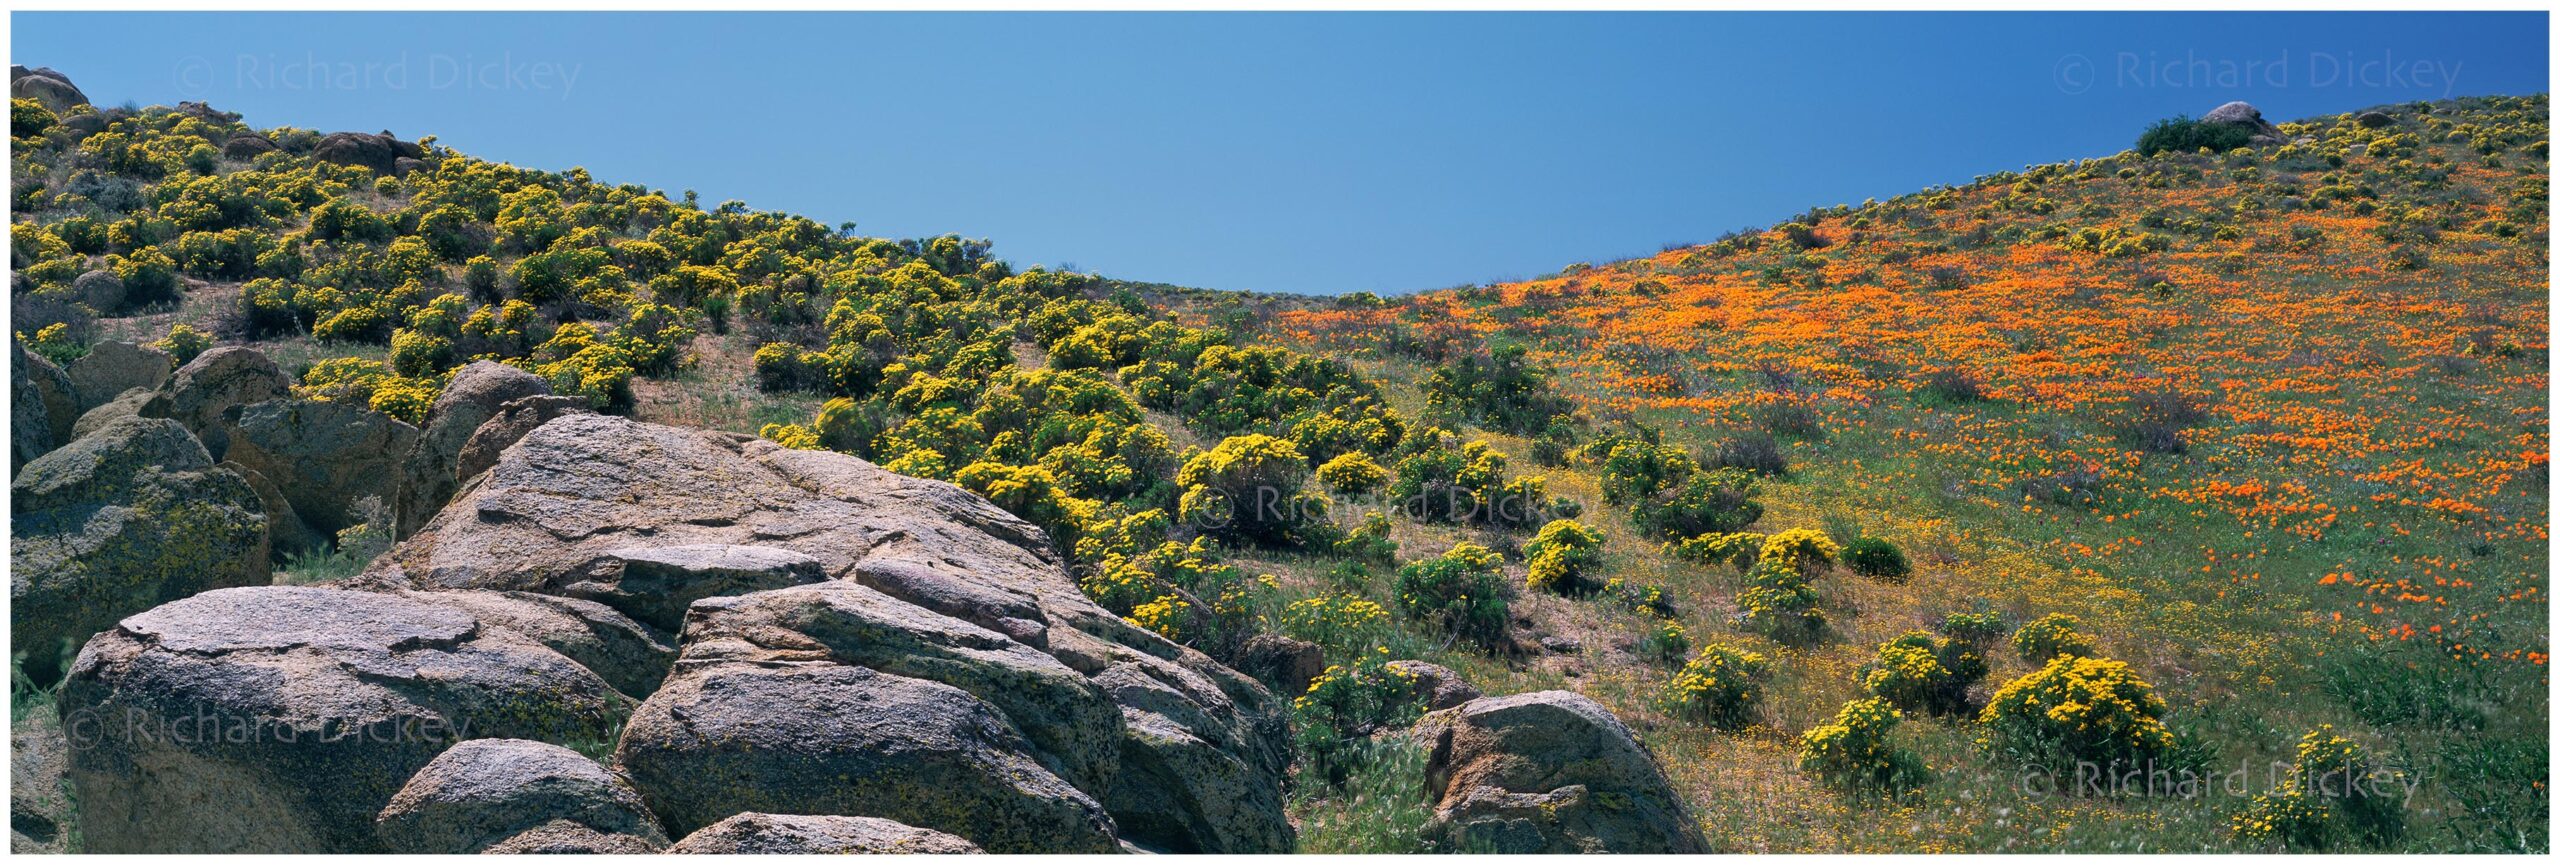 Panoramic photograph of quartzite boulders with yellow goldenbush wildflowers and orange California poppies. 